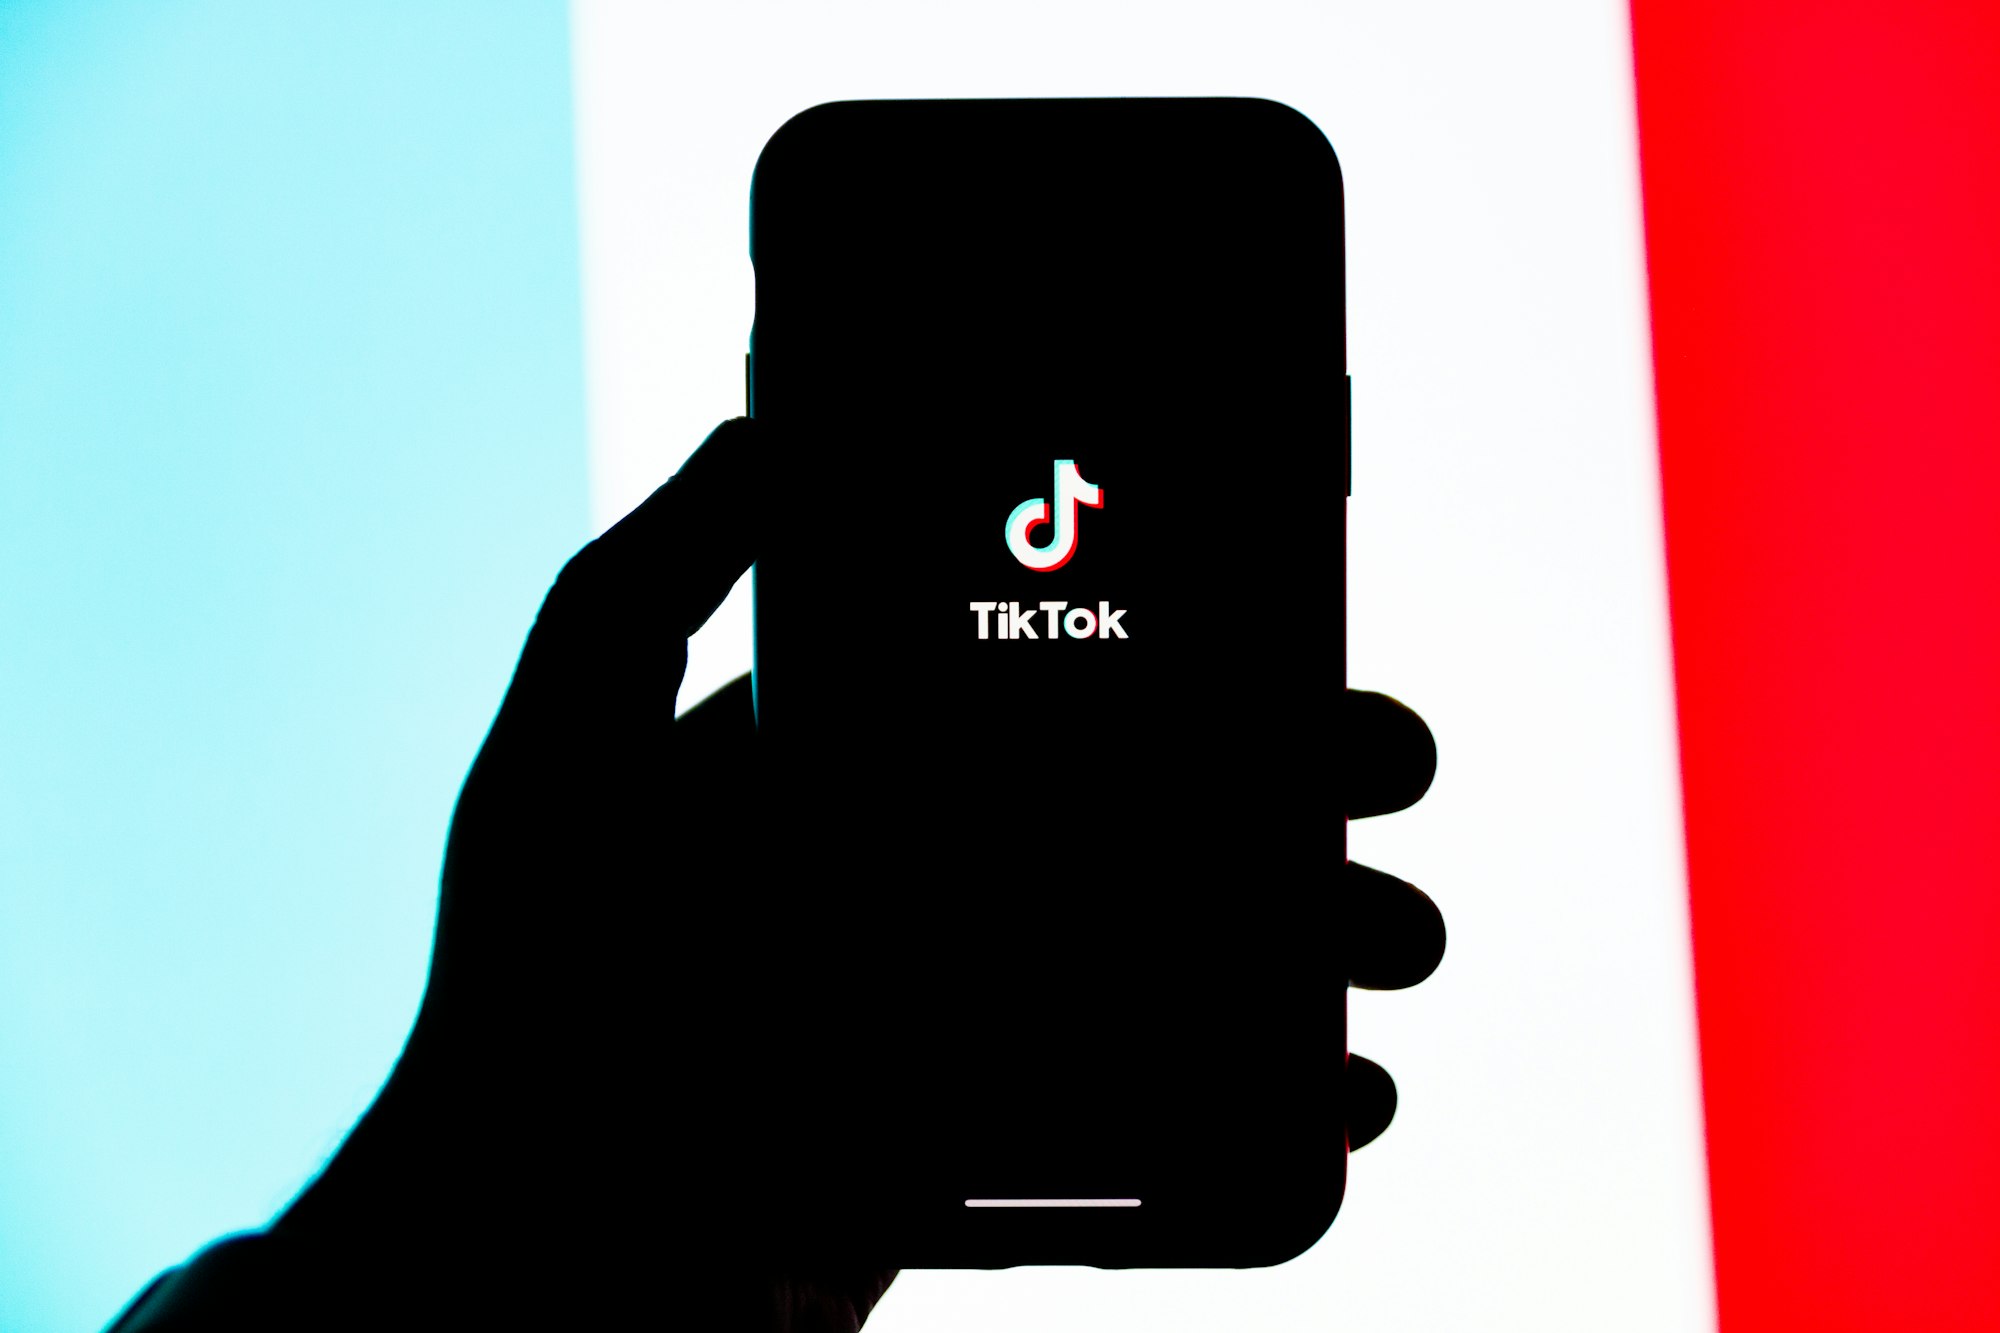 Montana becomes the first U.S. state to ban TikTok